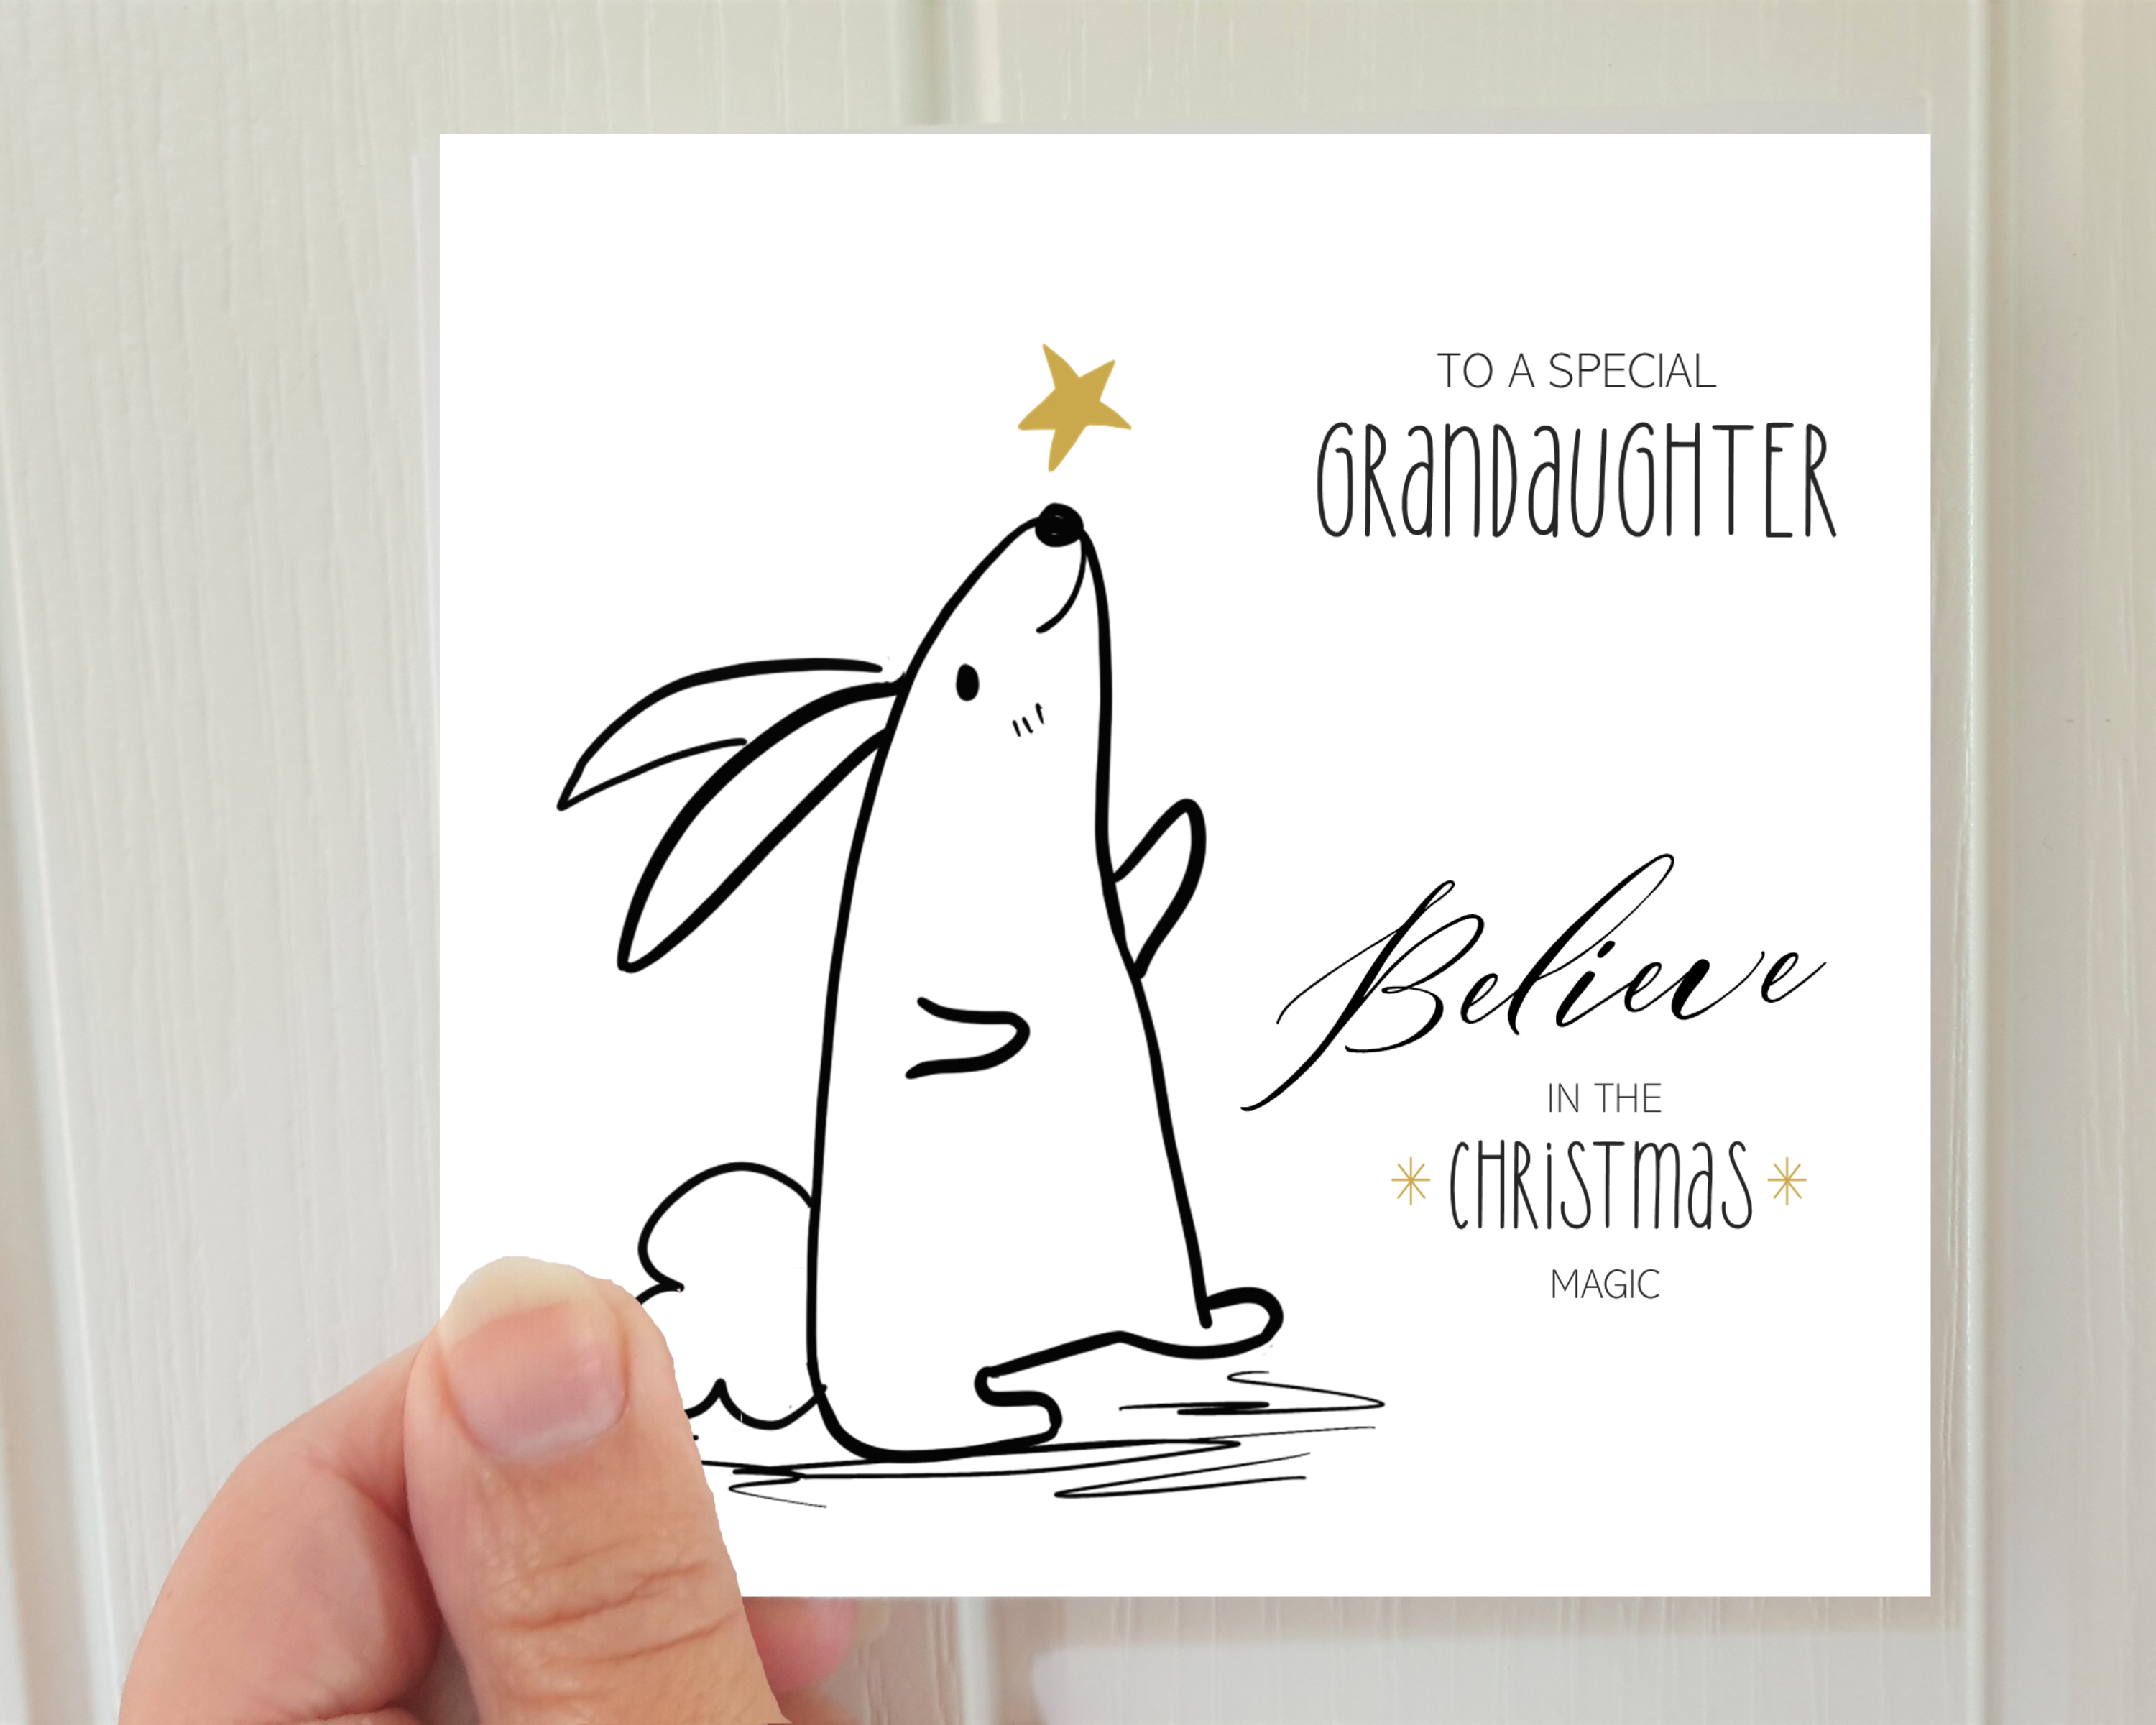 Poppleberry Believe Bunny & Golden Star Illustration 'Grandaughter' family Christmas Card, Held to show size.